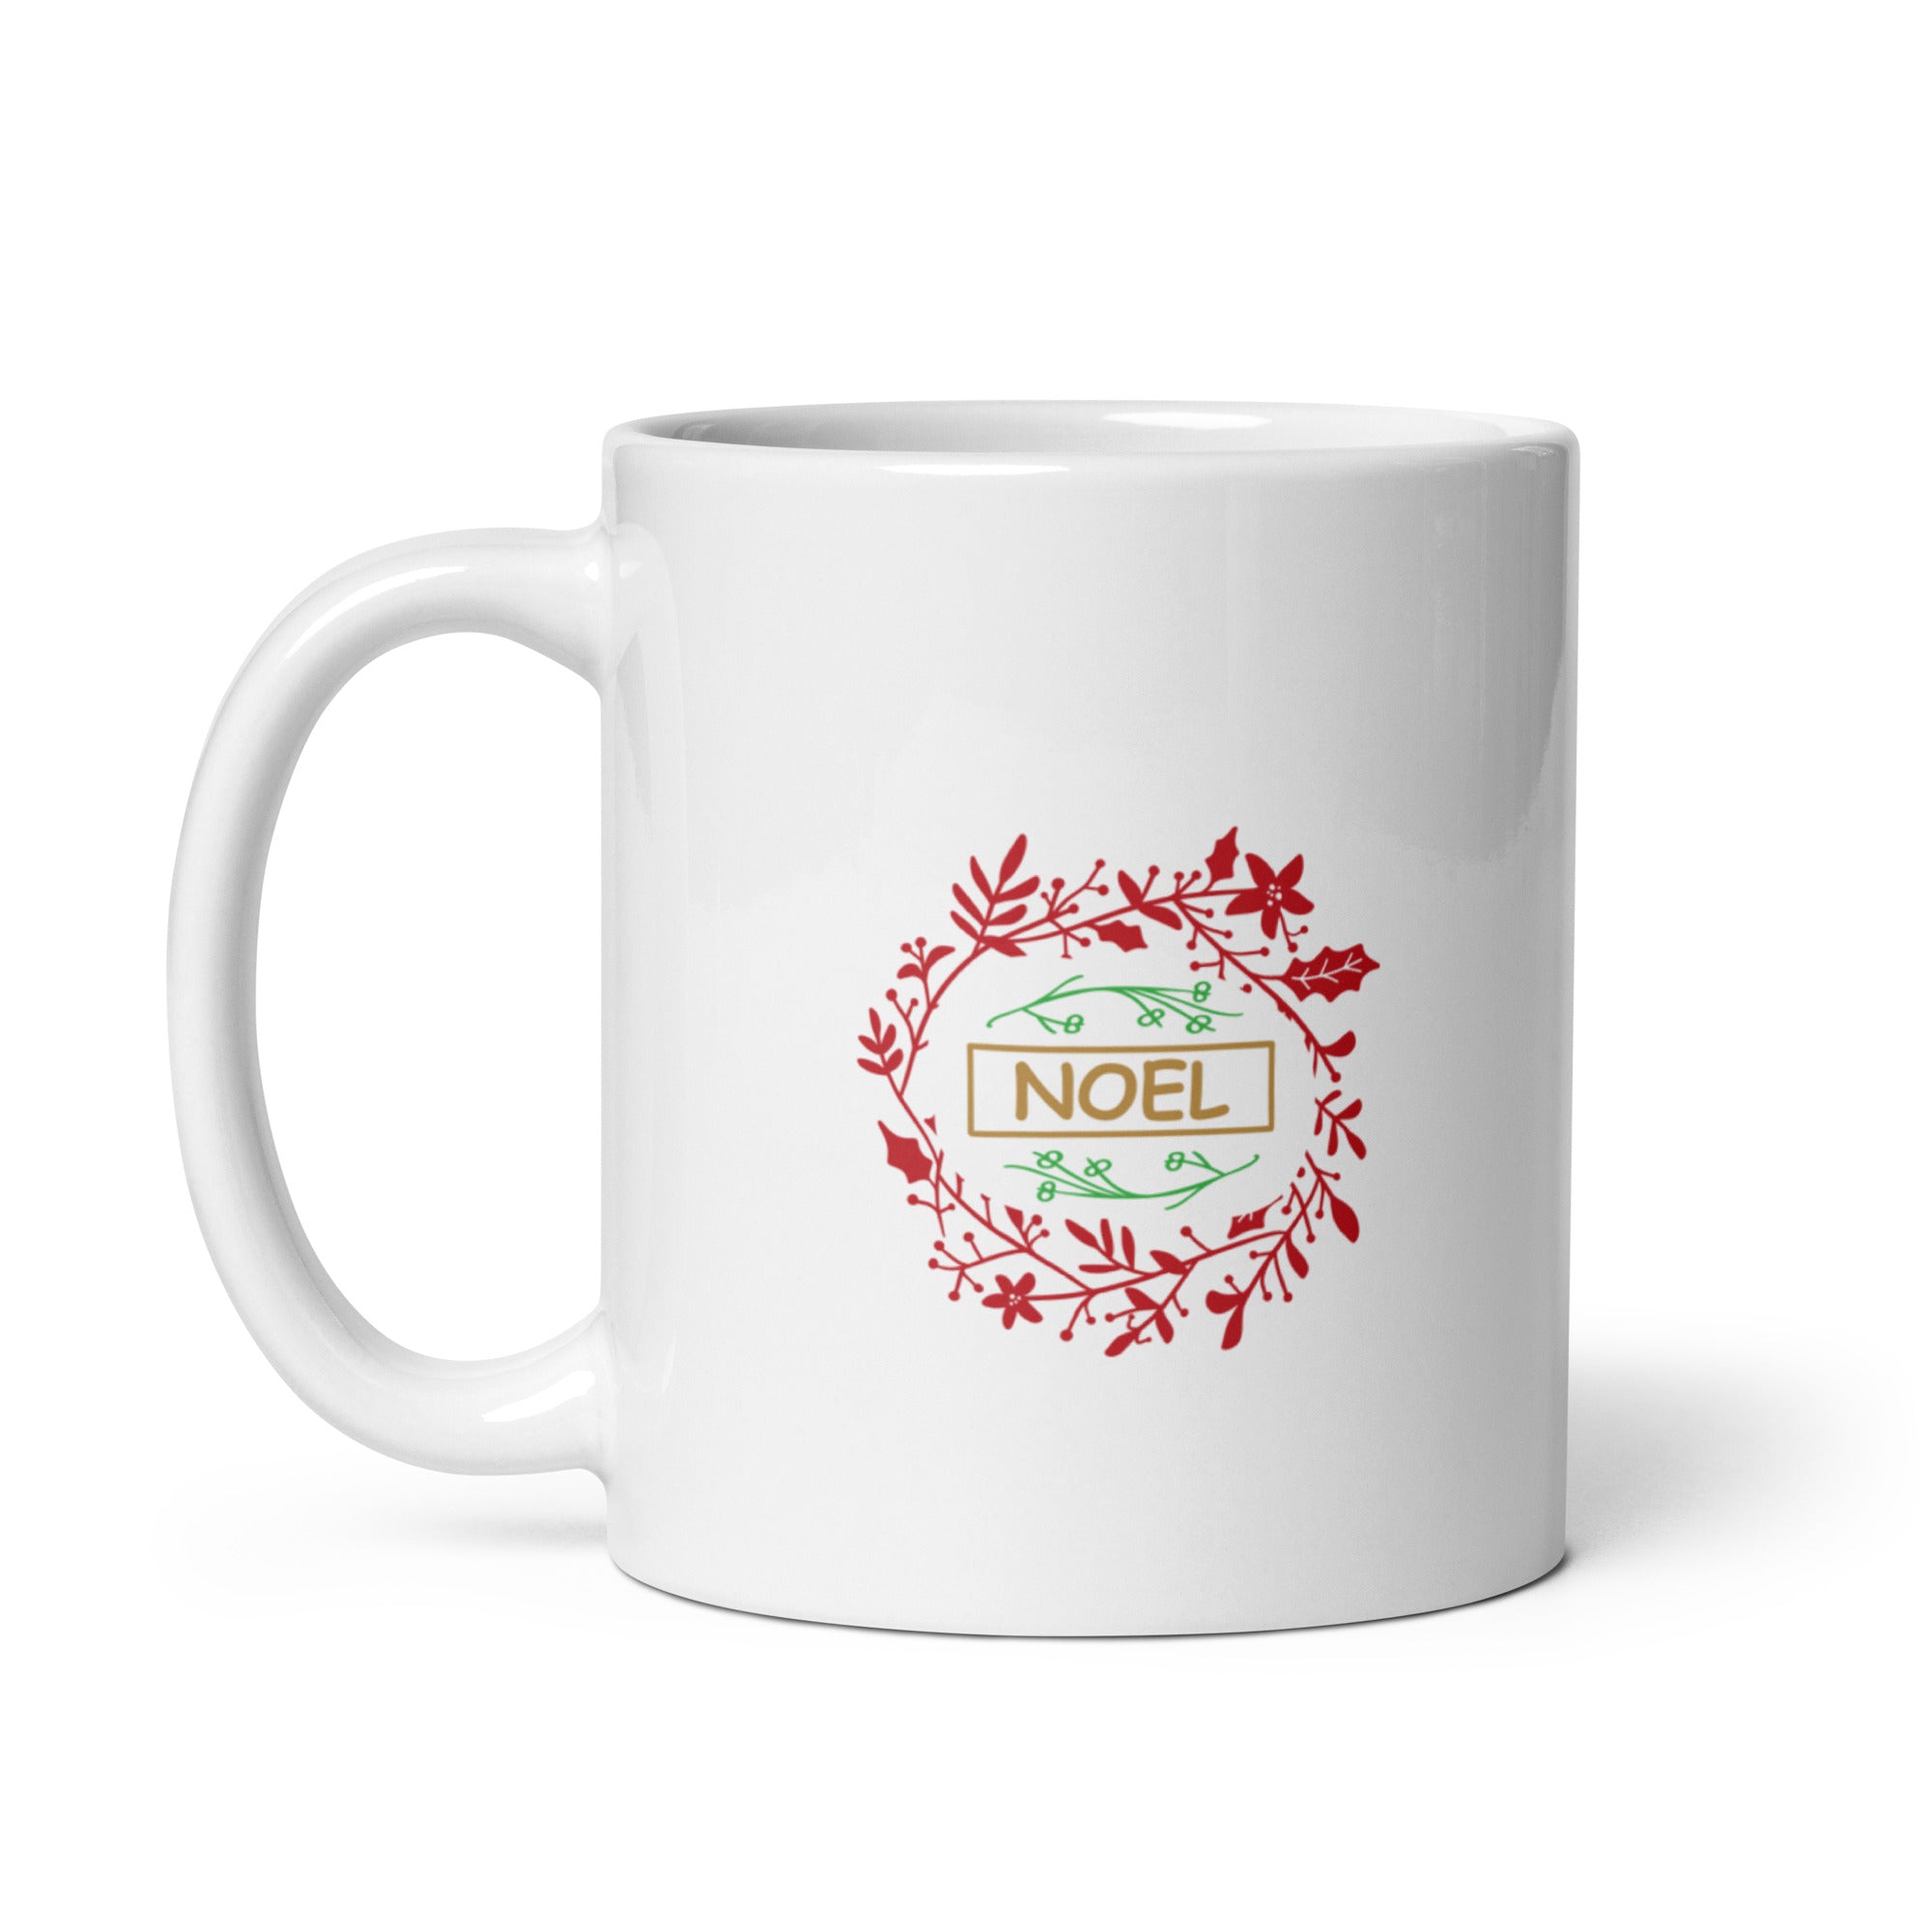 Noel - White glossy mug